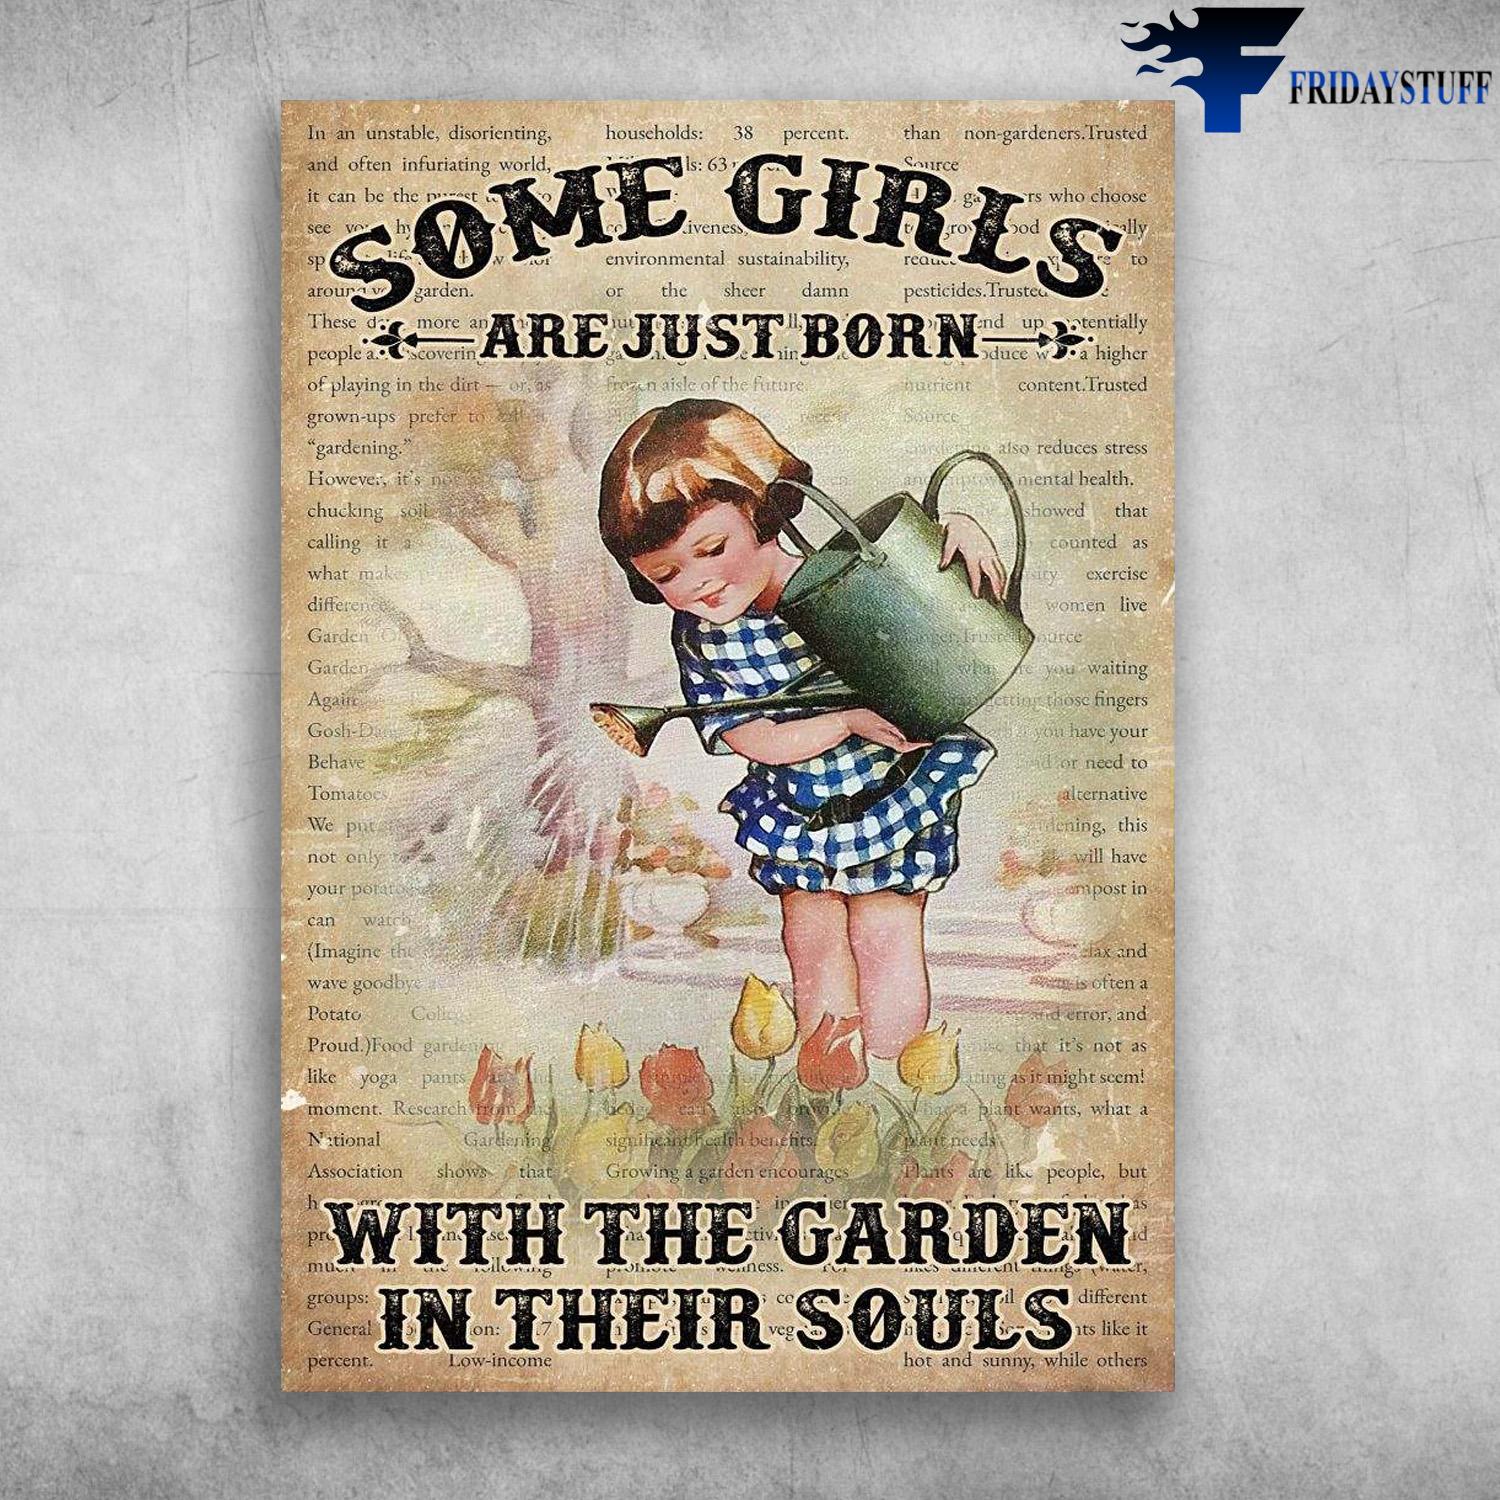 Little Girl Garden, Girl Gardening - Some Girls Are Just Born, With The Garden In Their Souls